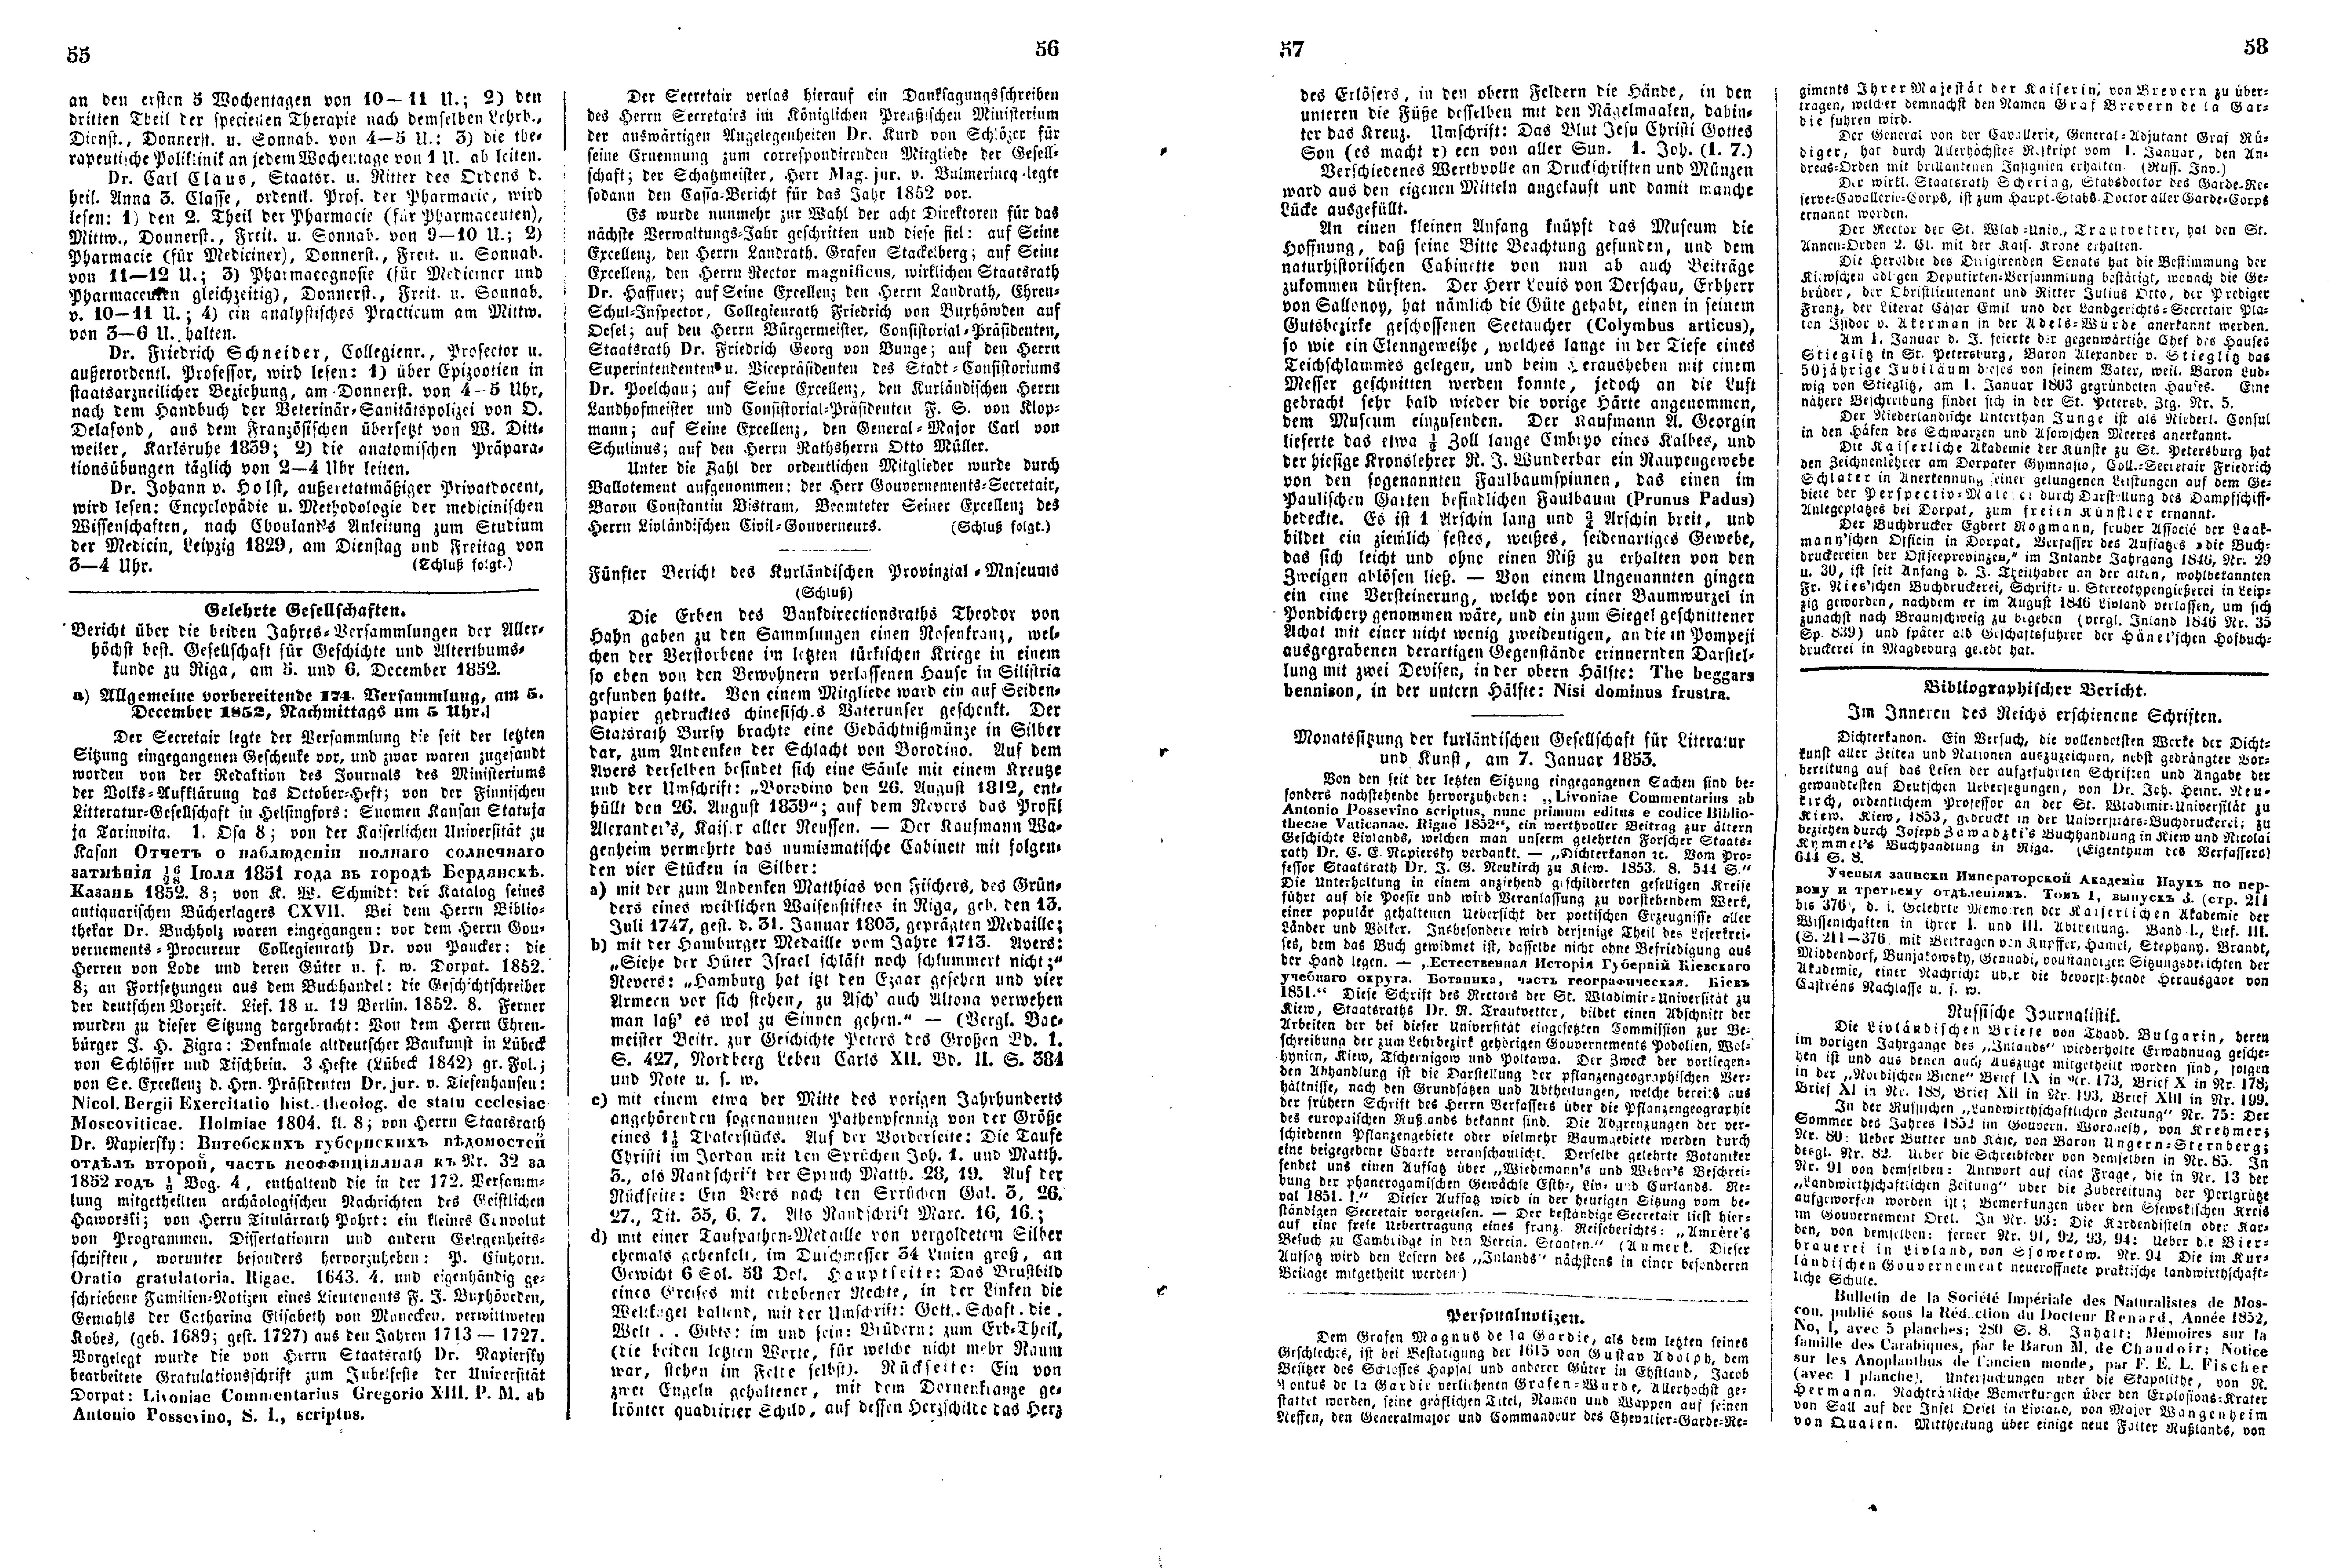 Das Inland [18] (1853) | 24. (55-58) Main body of text